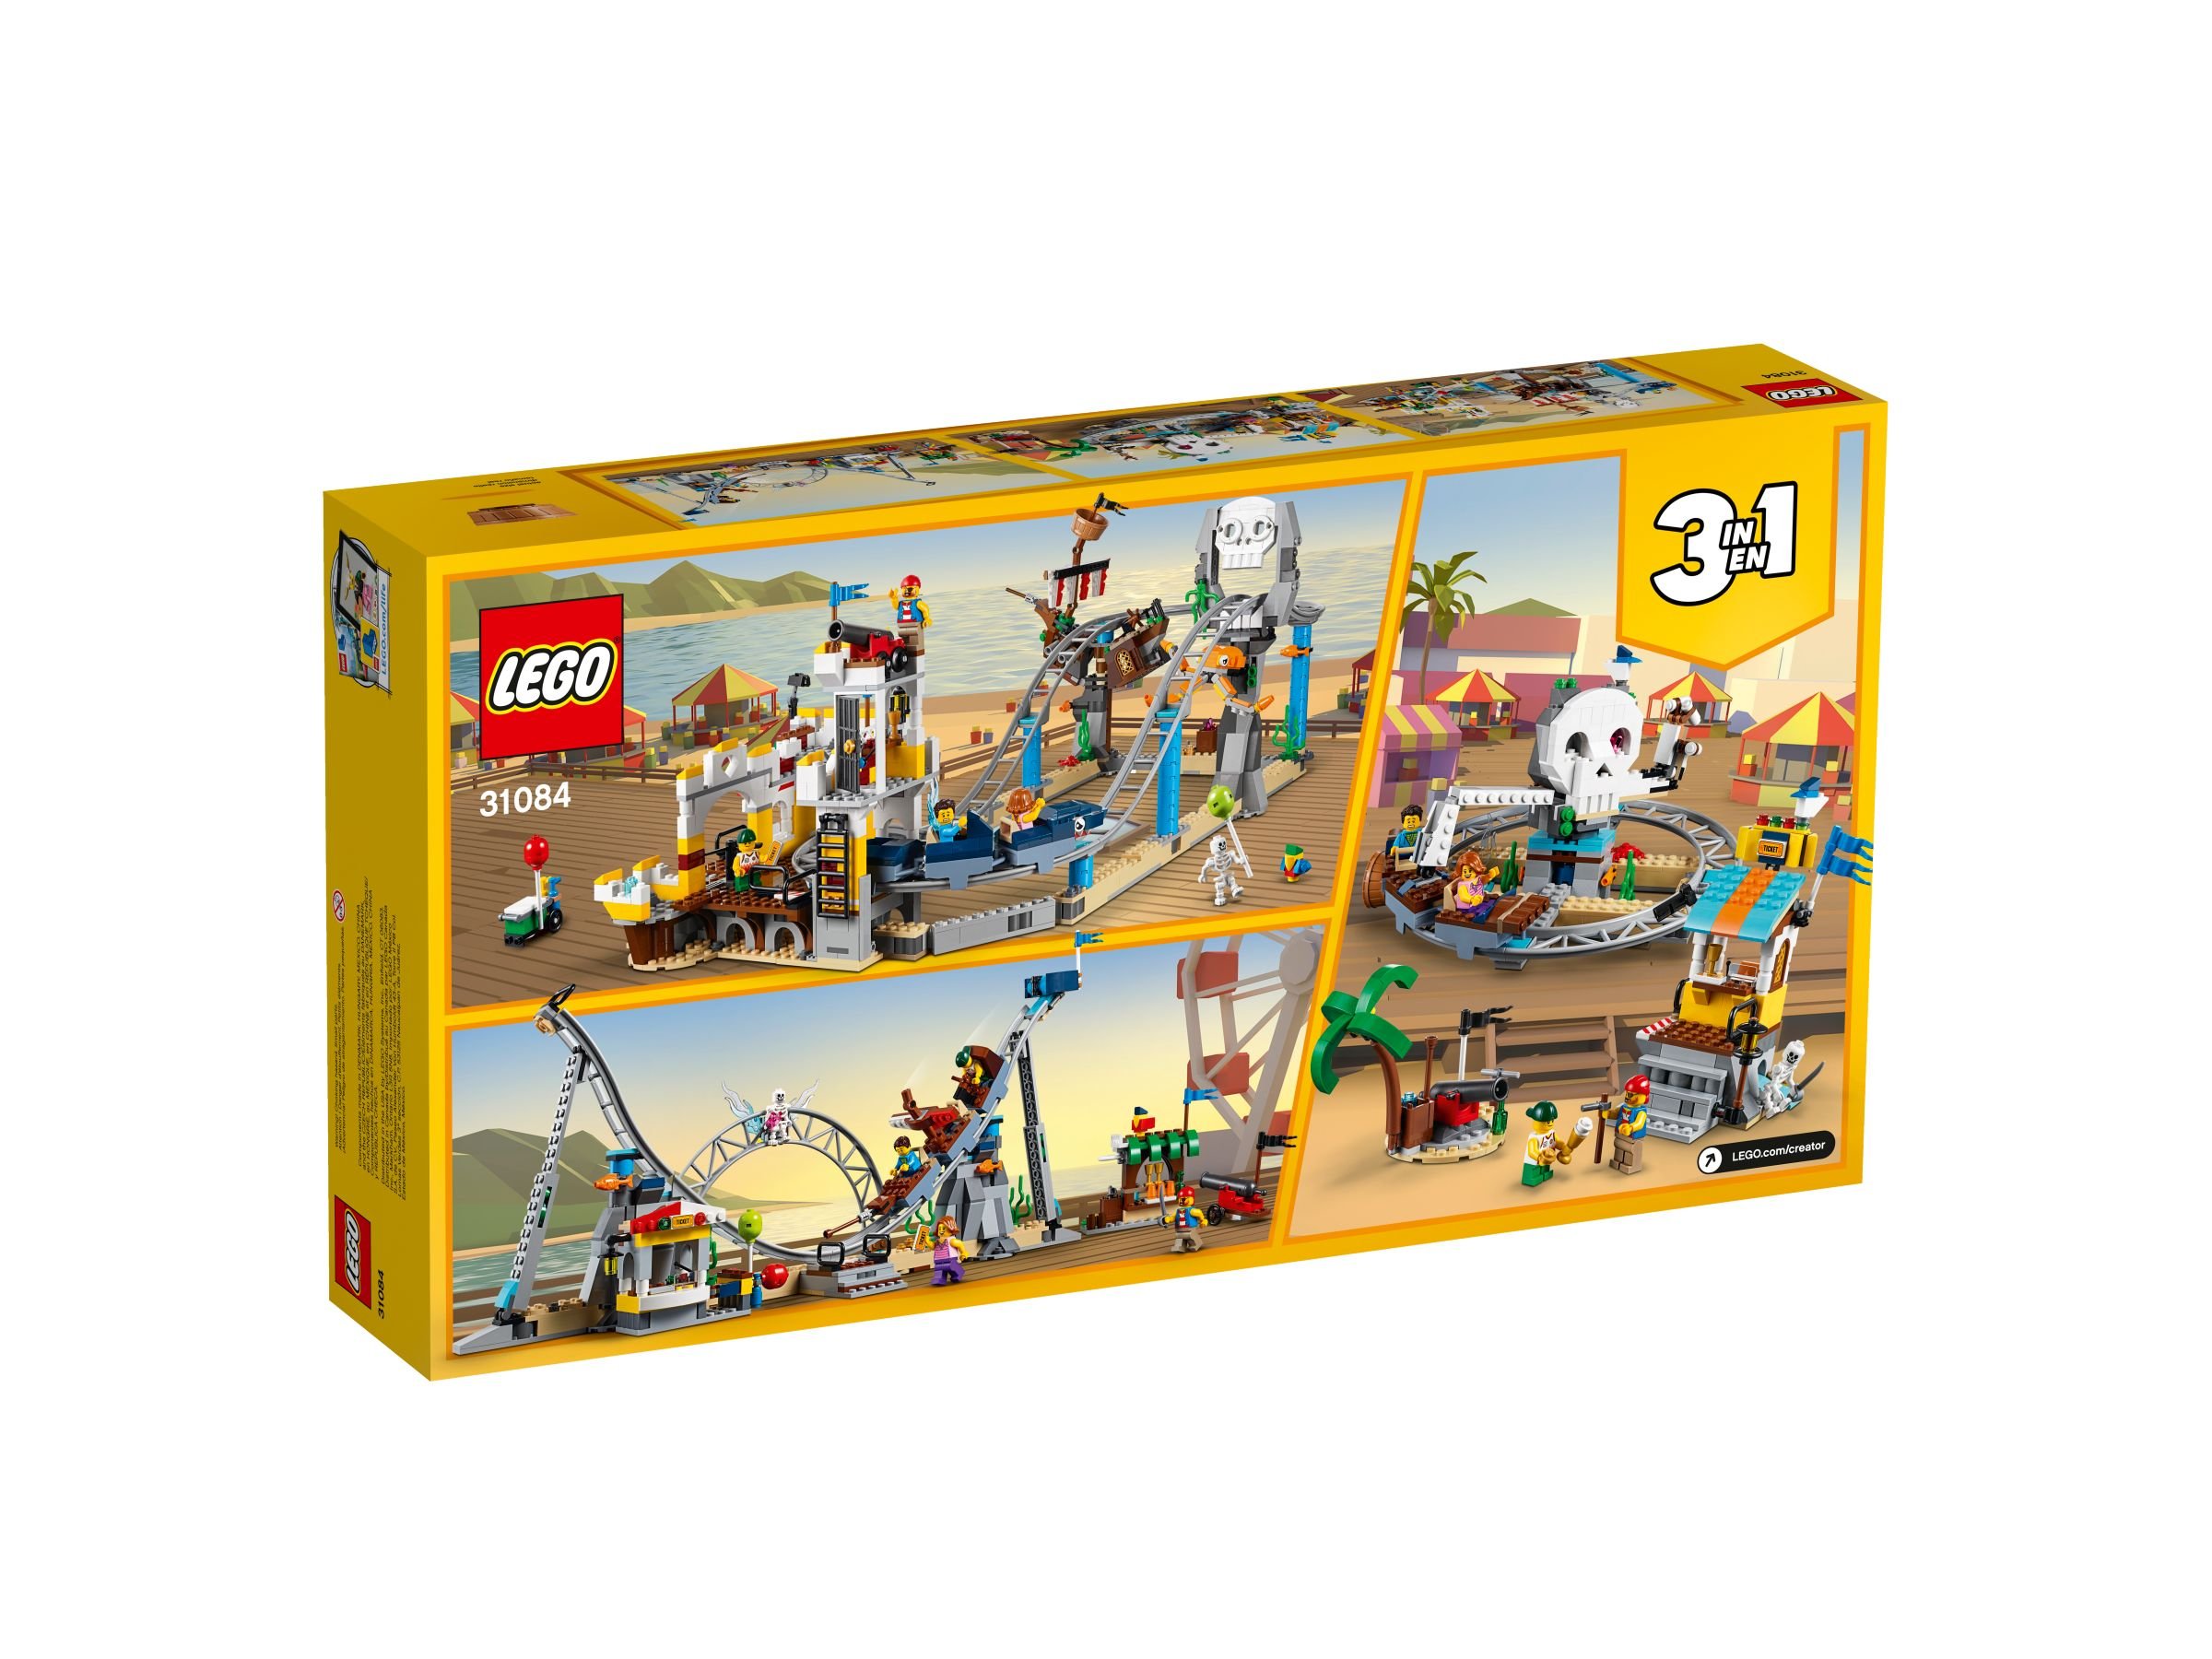 LEGO Creator 31084 Piraten-Achterbahn LEGO_31084_alt4.jpg